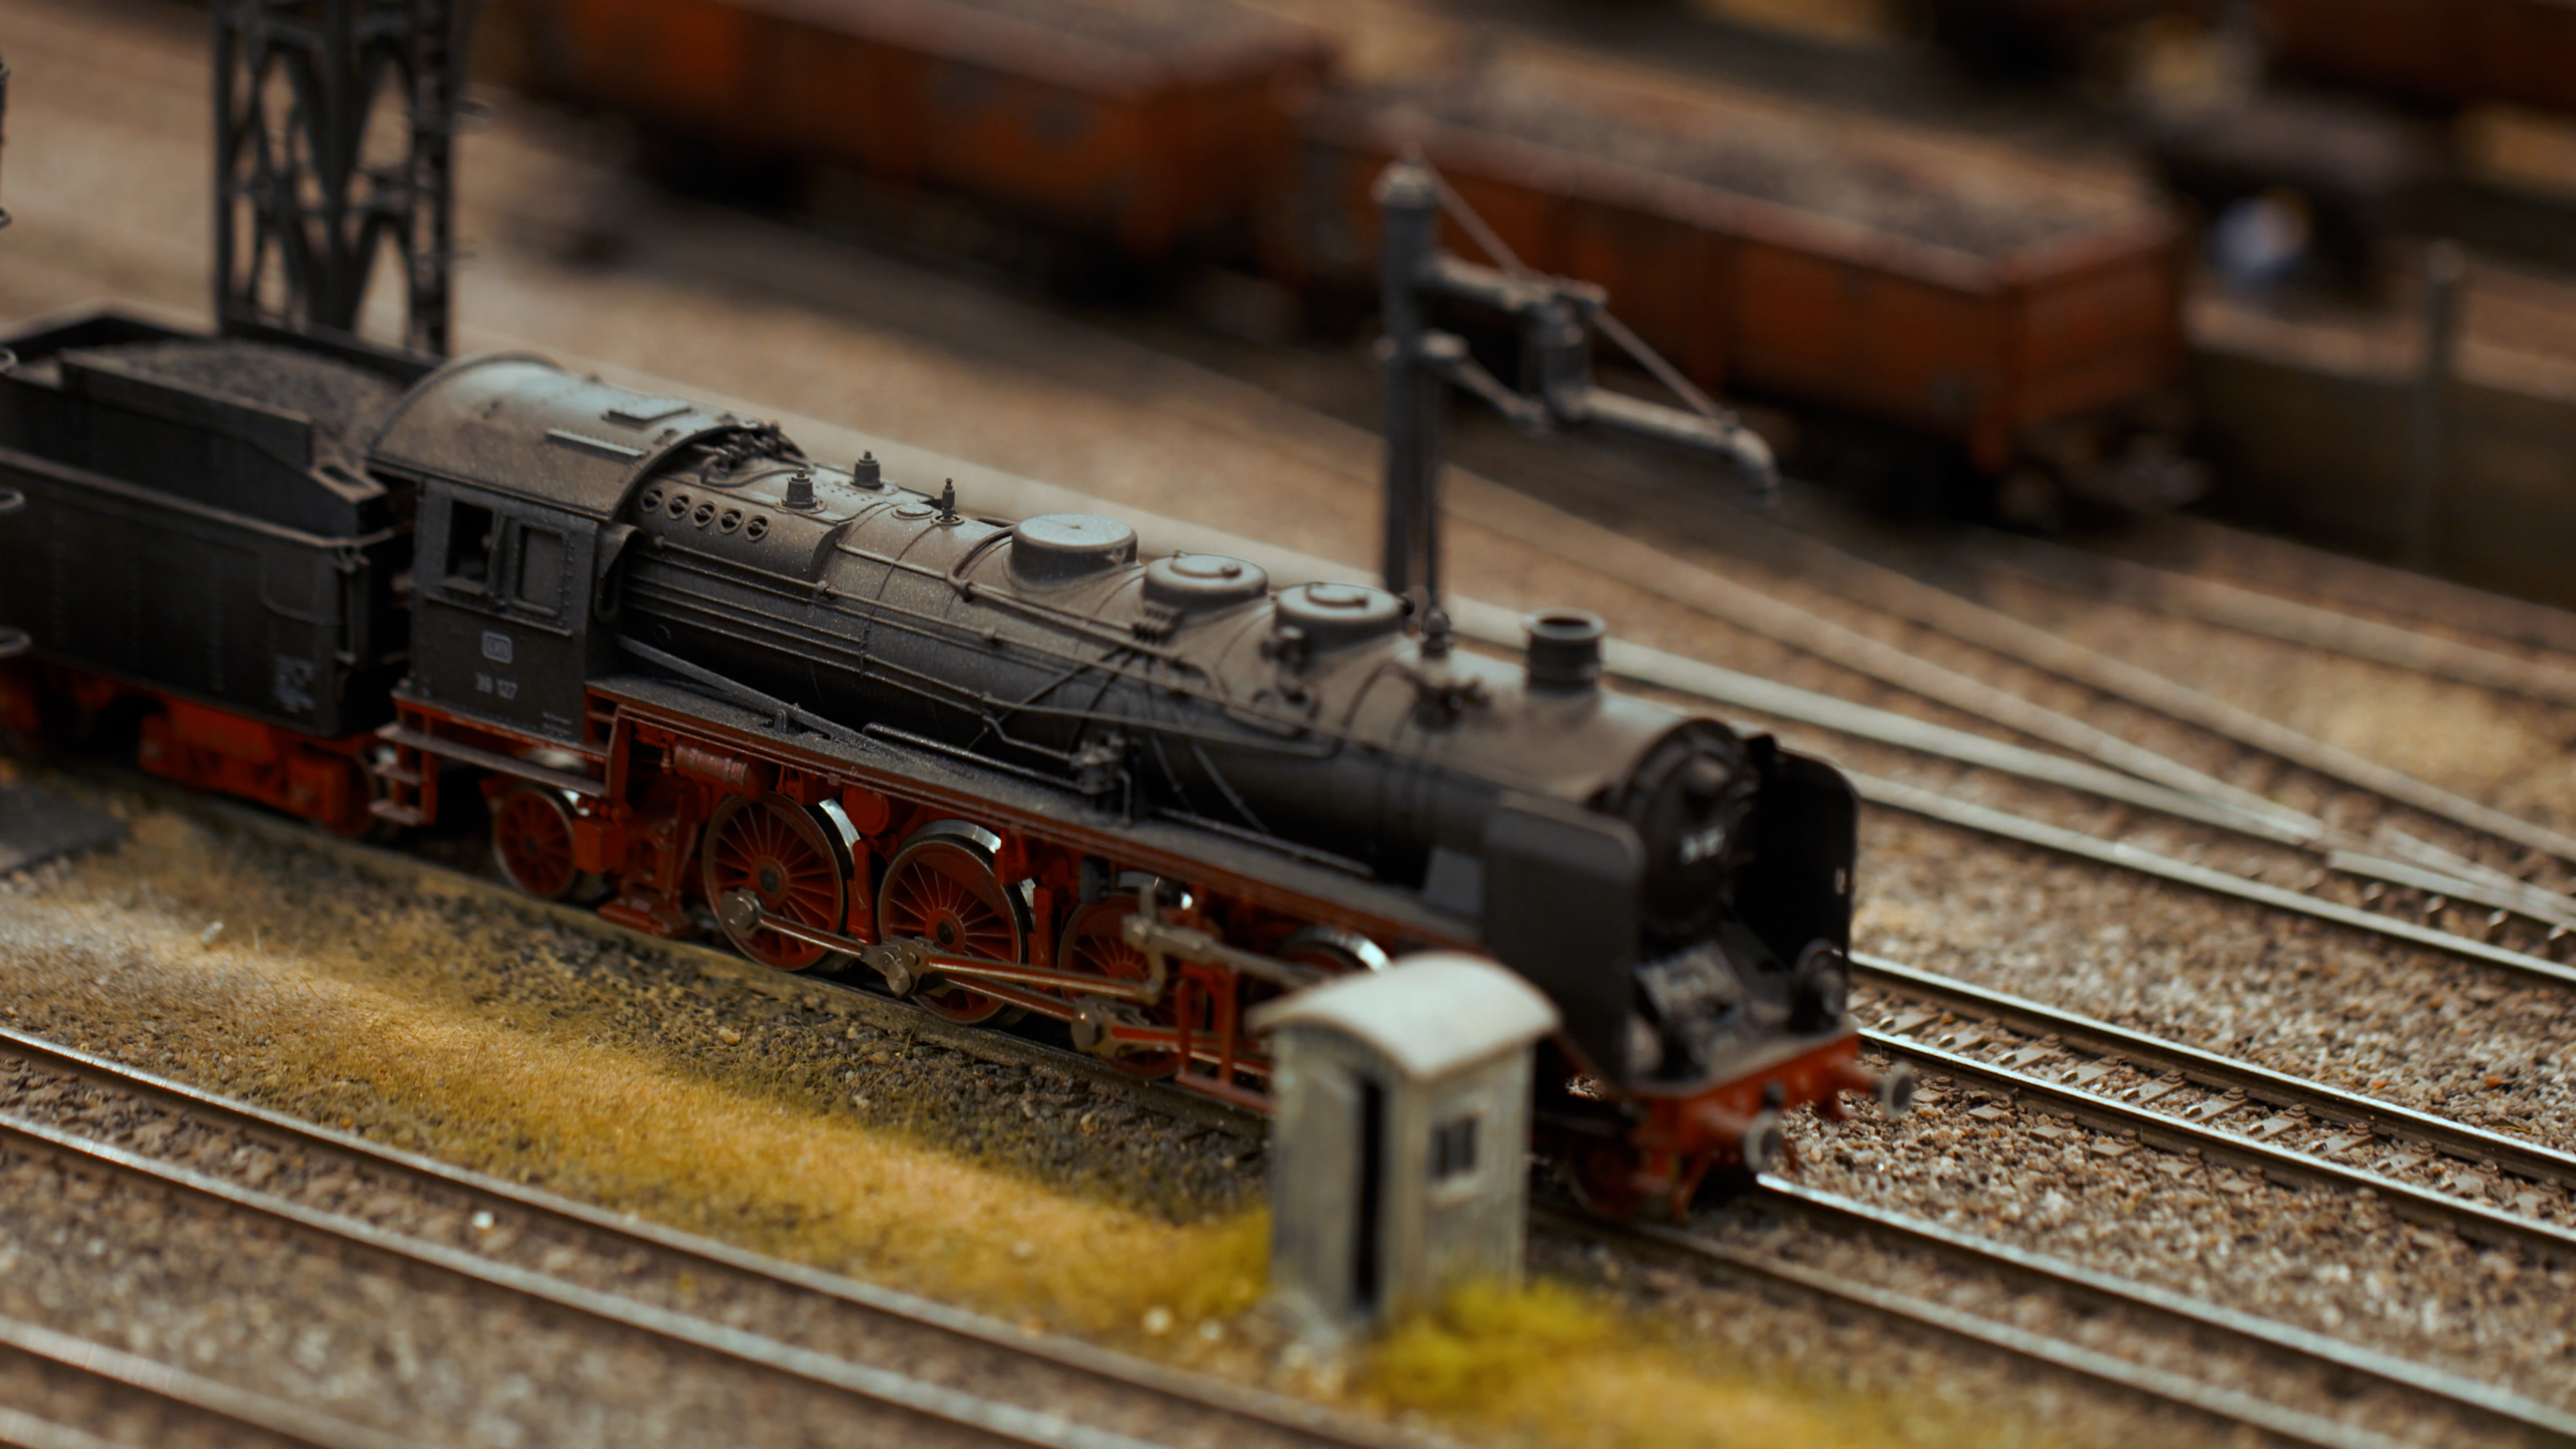 The model railway